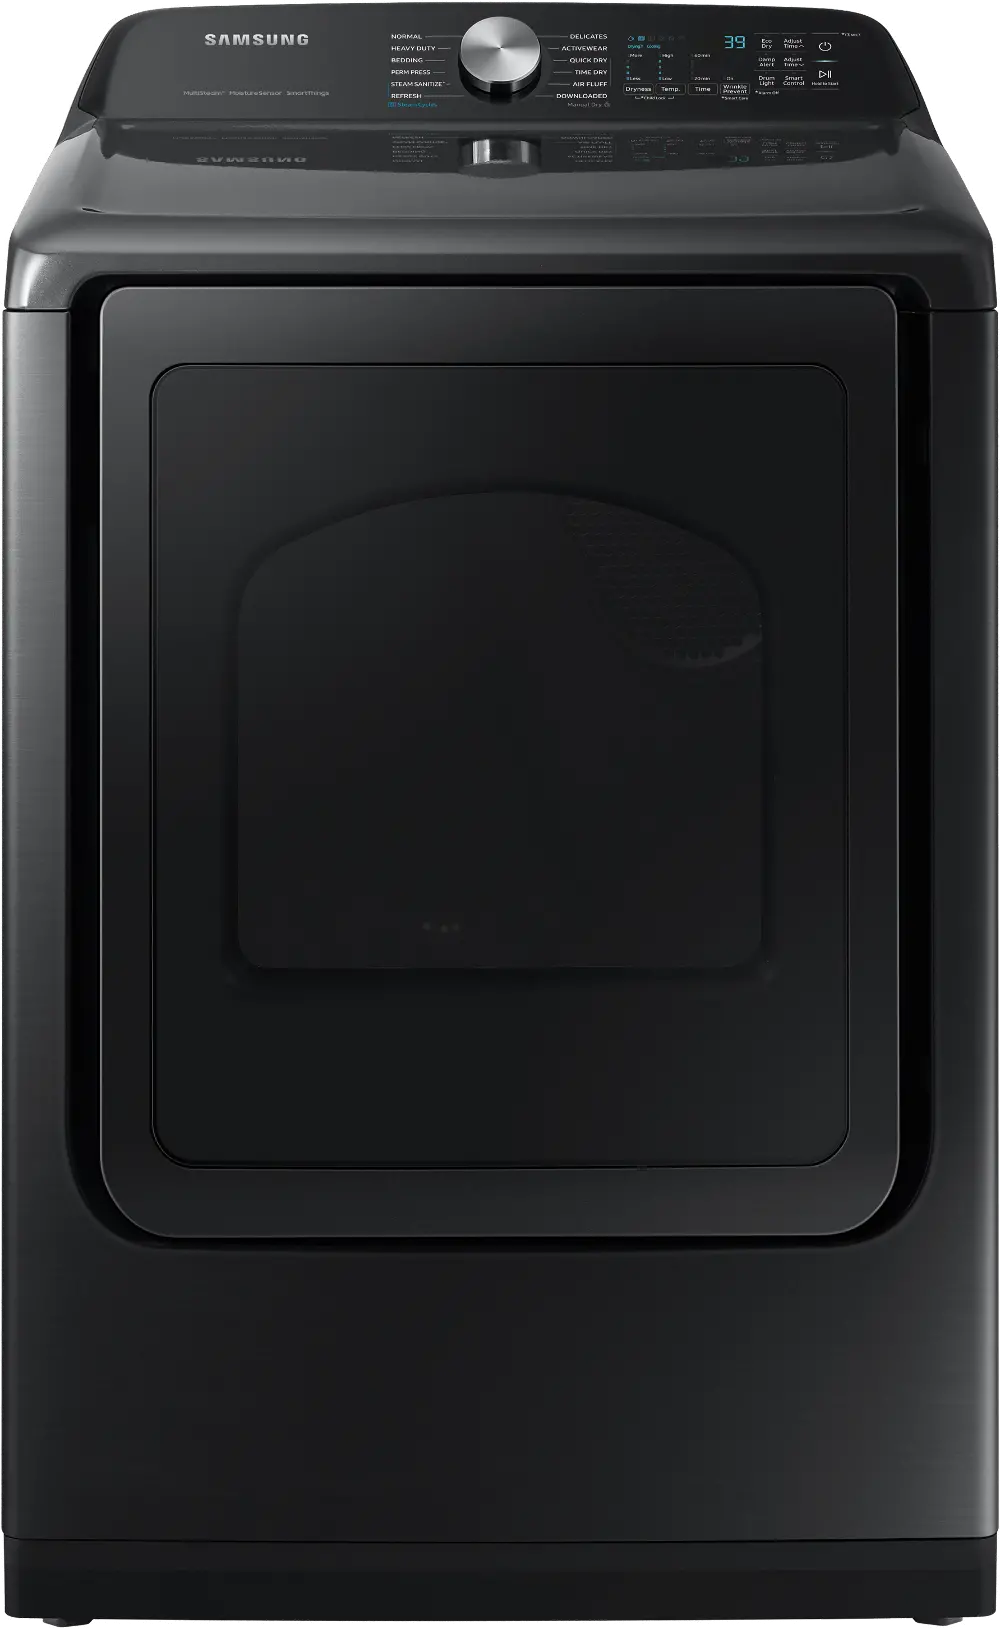 DVE52A5500V Samsung Electric Dryer - Black, 52A5500-1